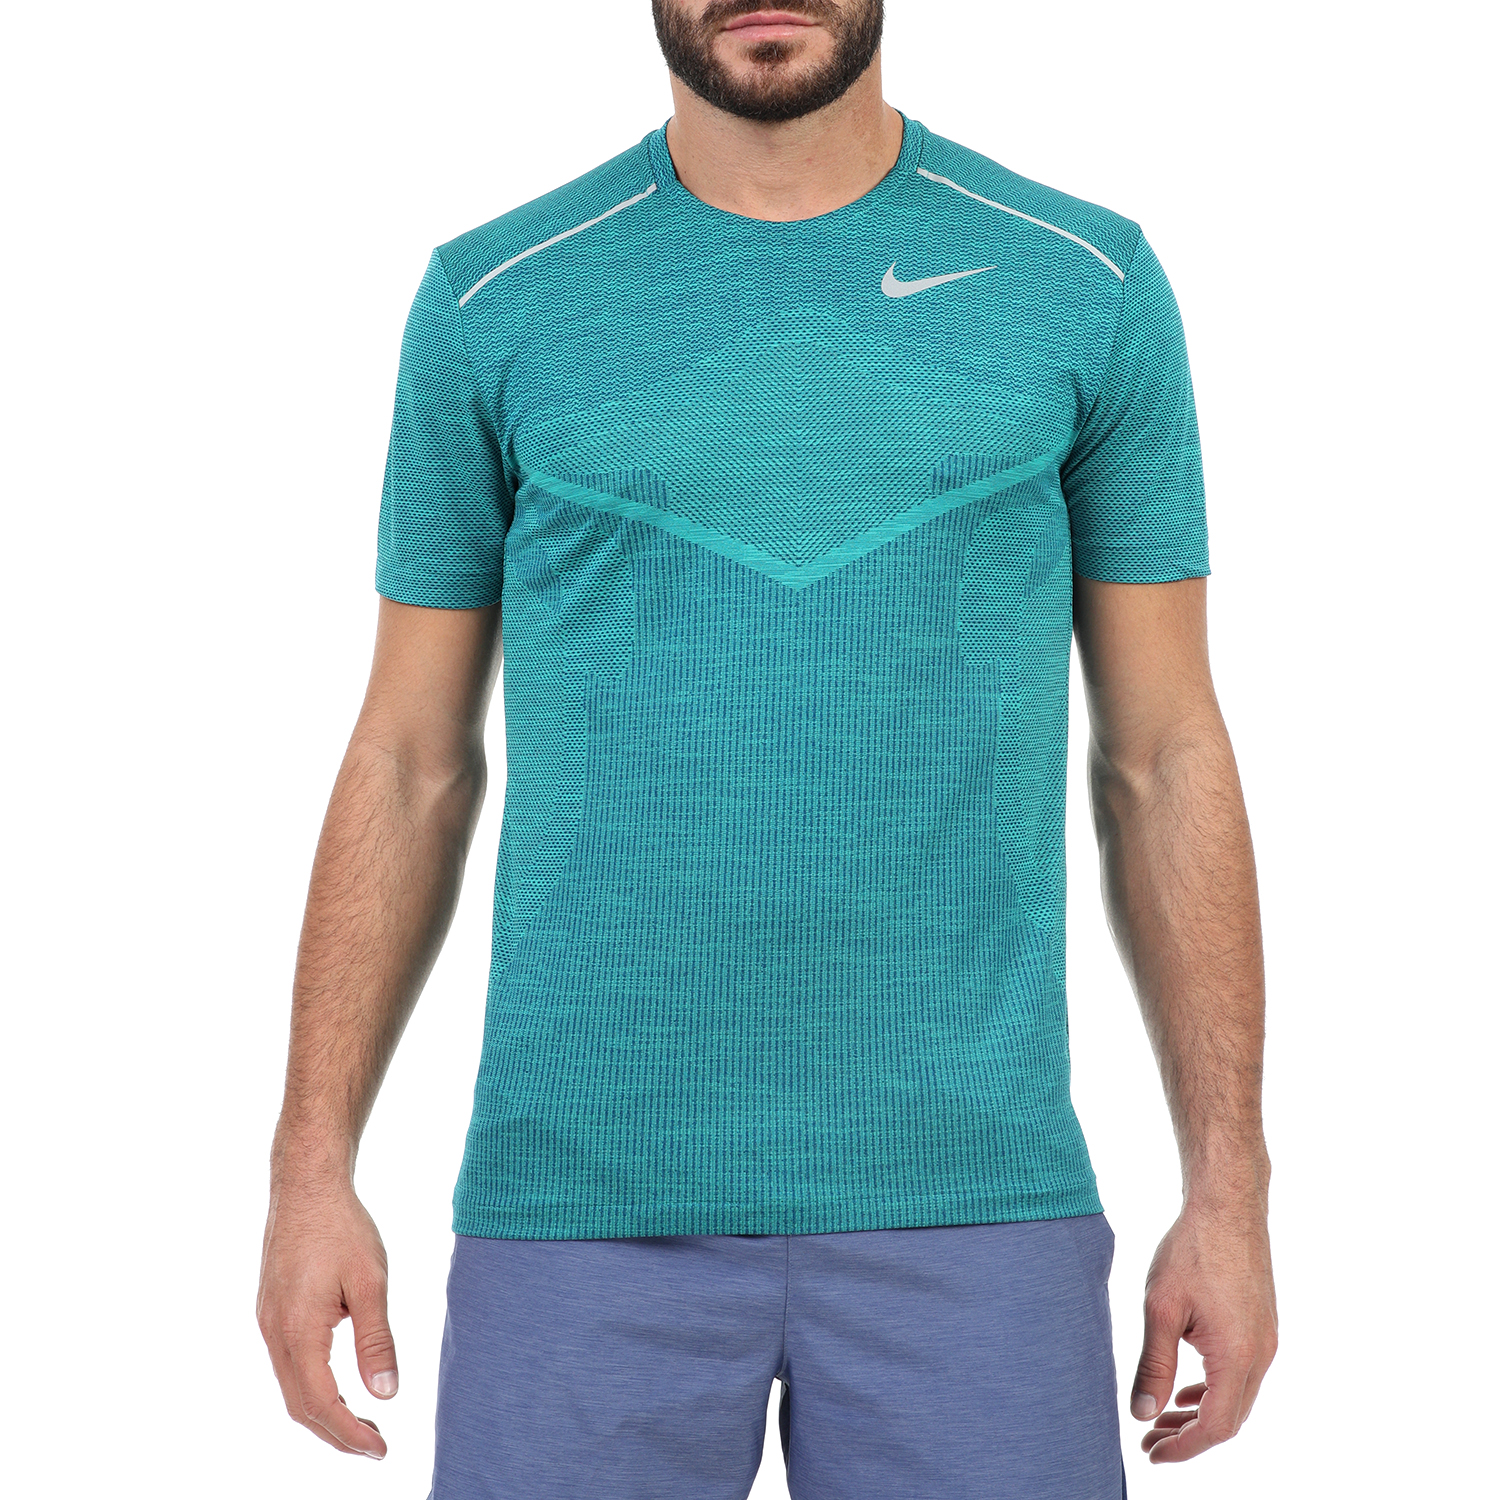 NIKE - Ανδρικό t-shirt Nike TechKnit Ultra μπλε Ανδρικά/Ρούχα/Αθλητικά/T-shirt